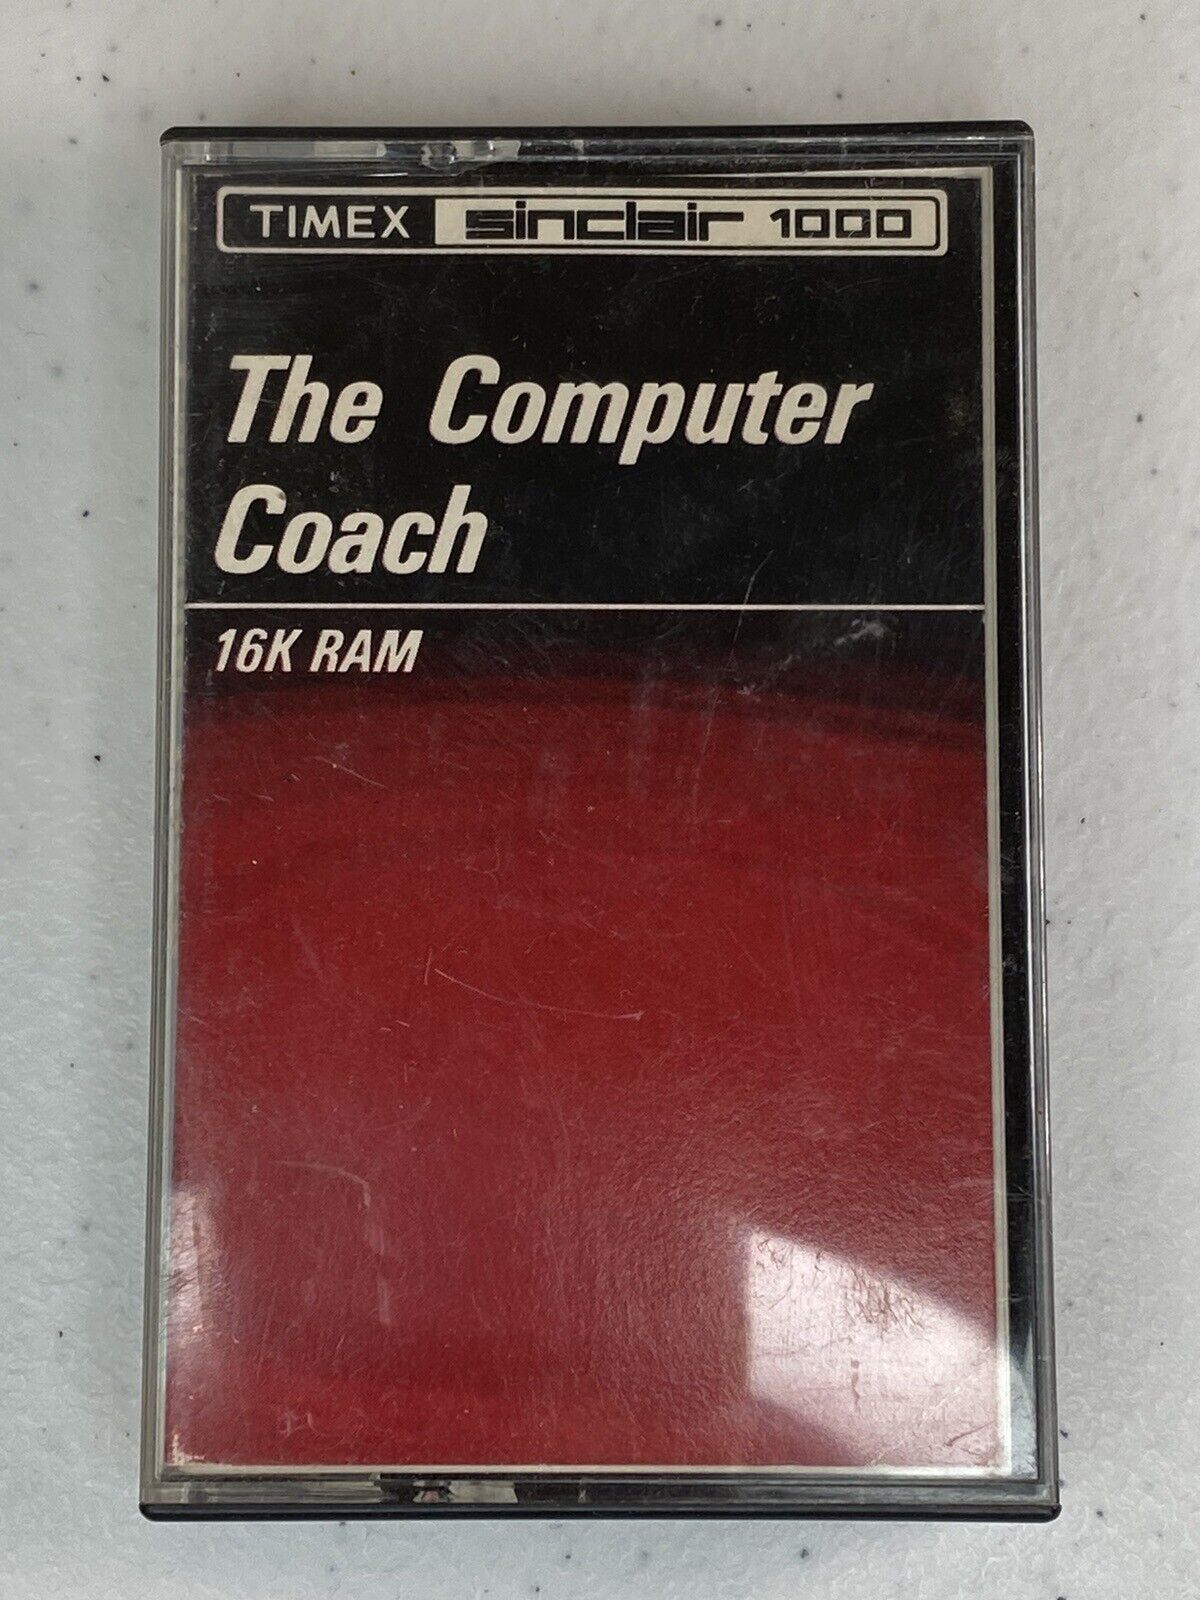 Timex Sinclair 1000 The Computer Coach Cassette Software 16k RAM